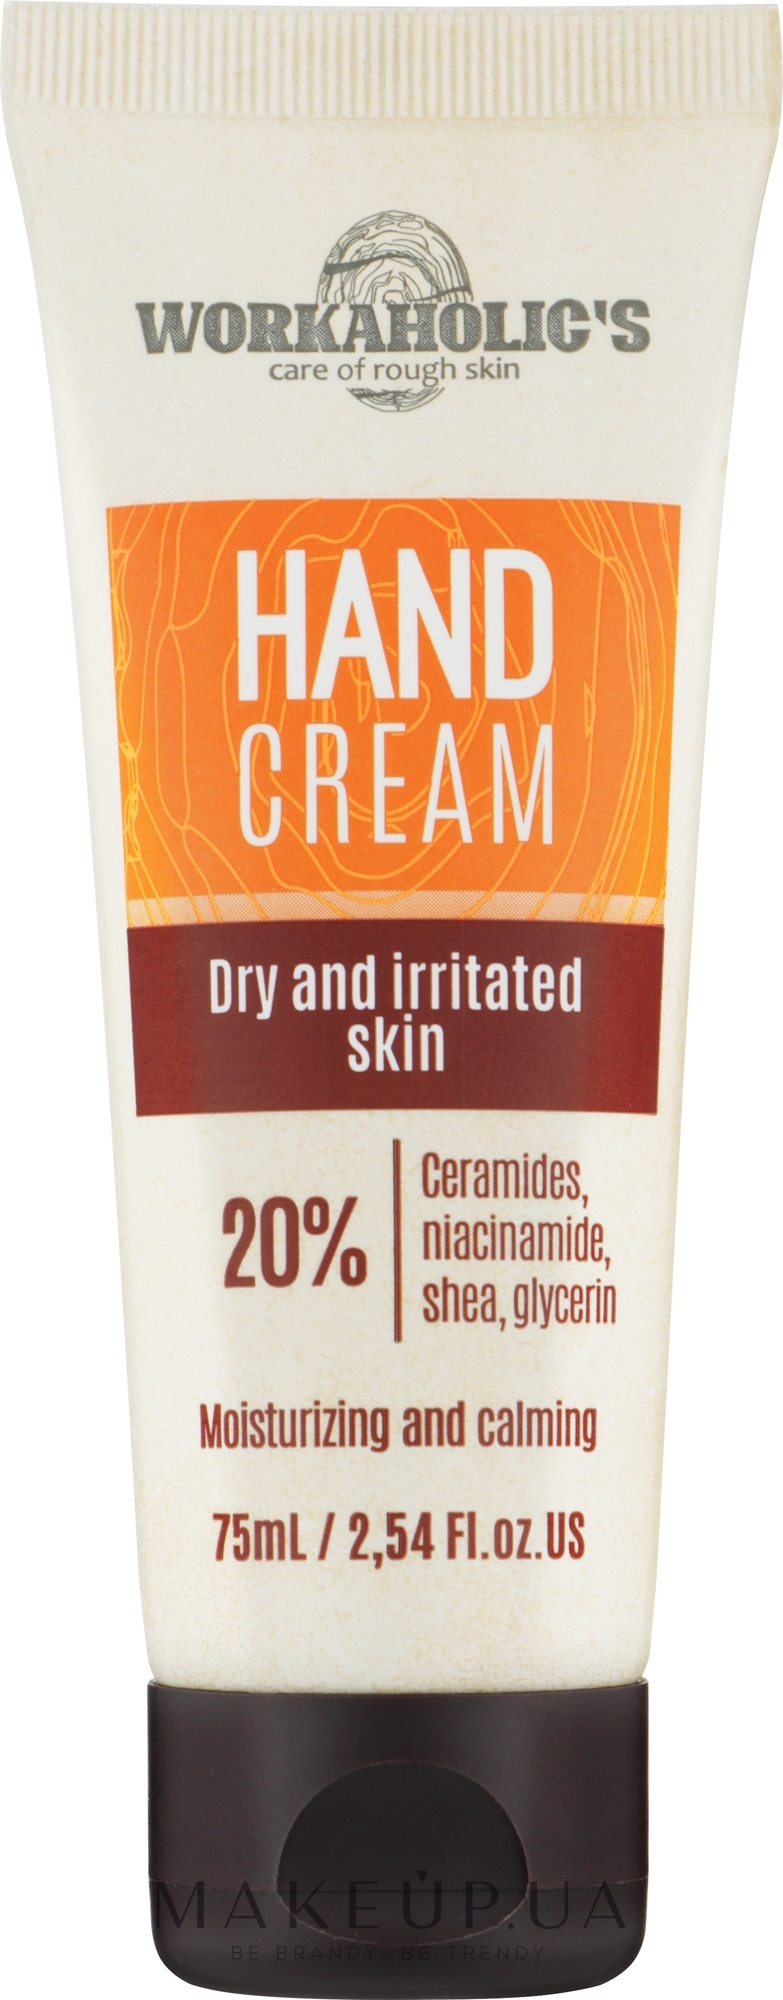 Крем для рук для сухой грубой кожи - Workaholic's Hand Cream Dry and Irritated Skin 20% — фото 75ml